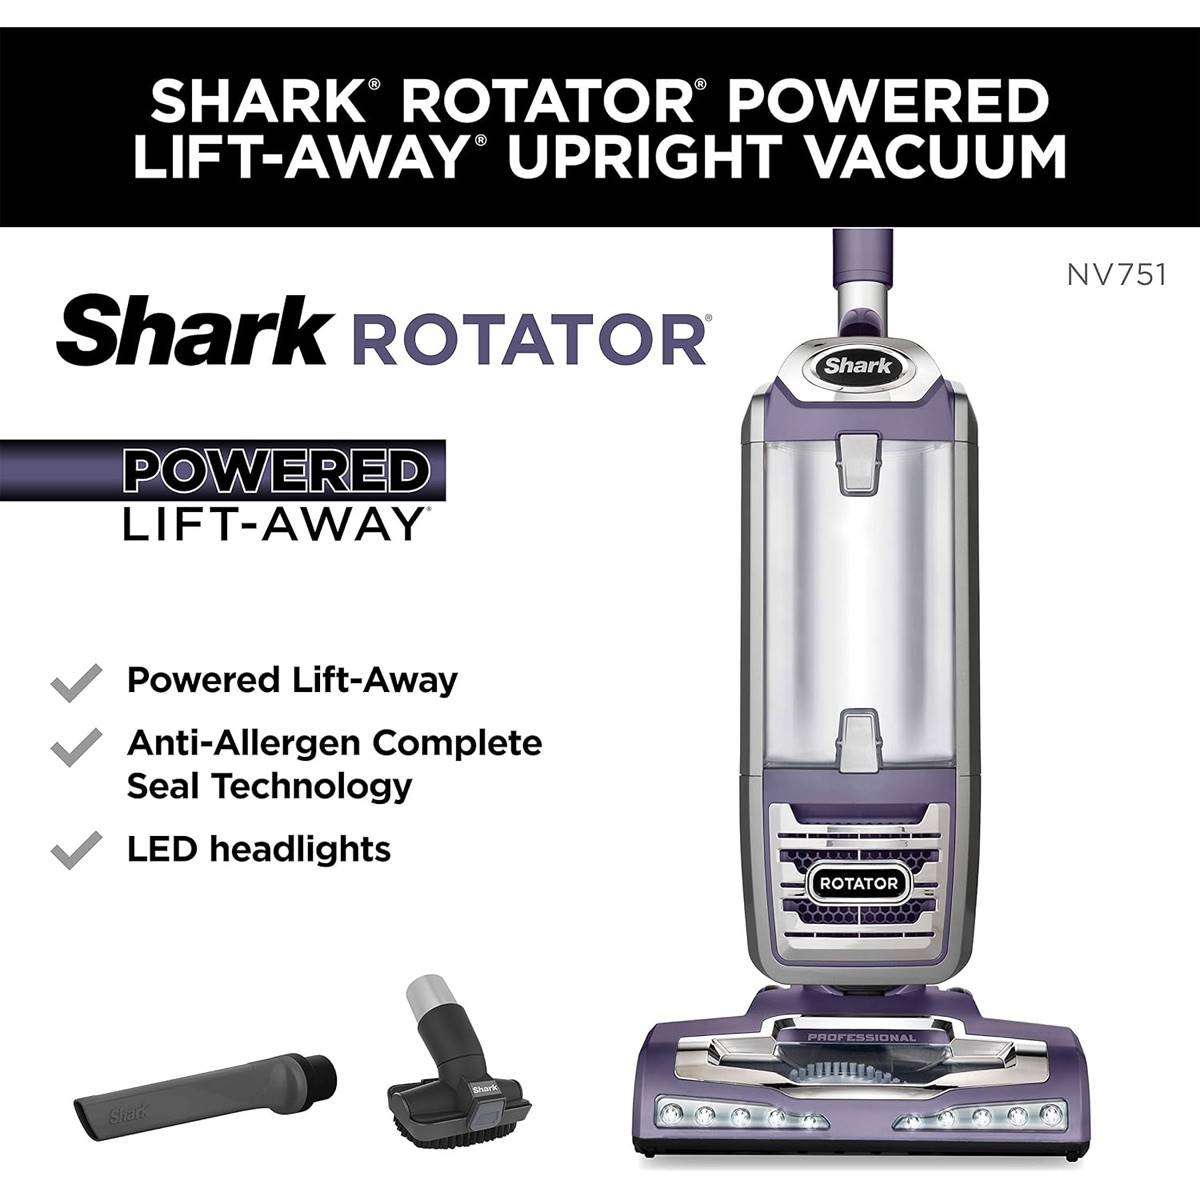 Shark(R) Rotator Power Lift-Away Upright Vacuum